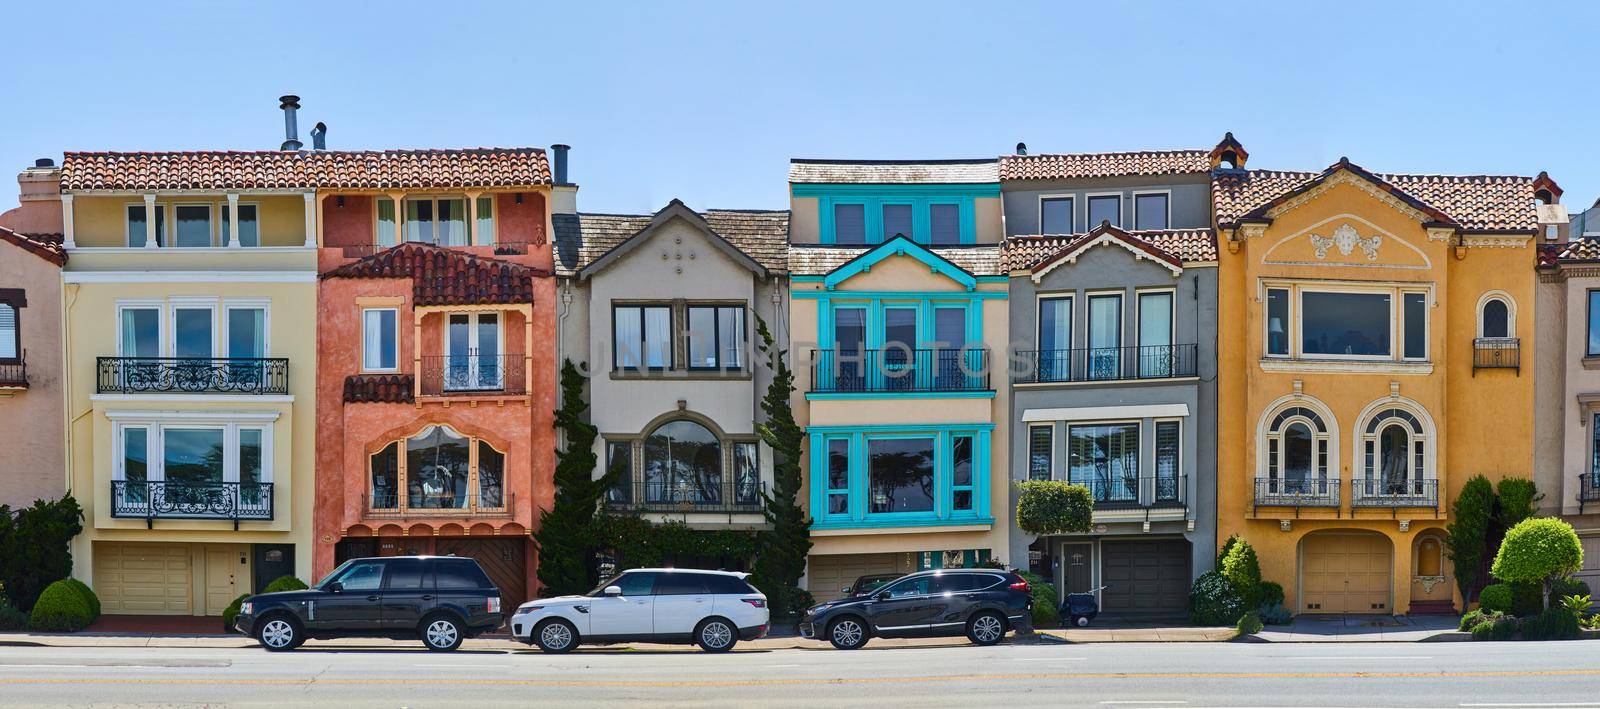 Image of Panorama of beach homes in San Francisco, California